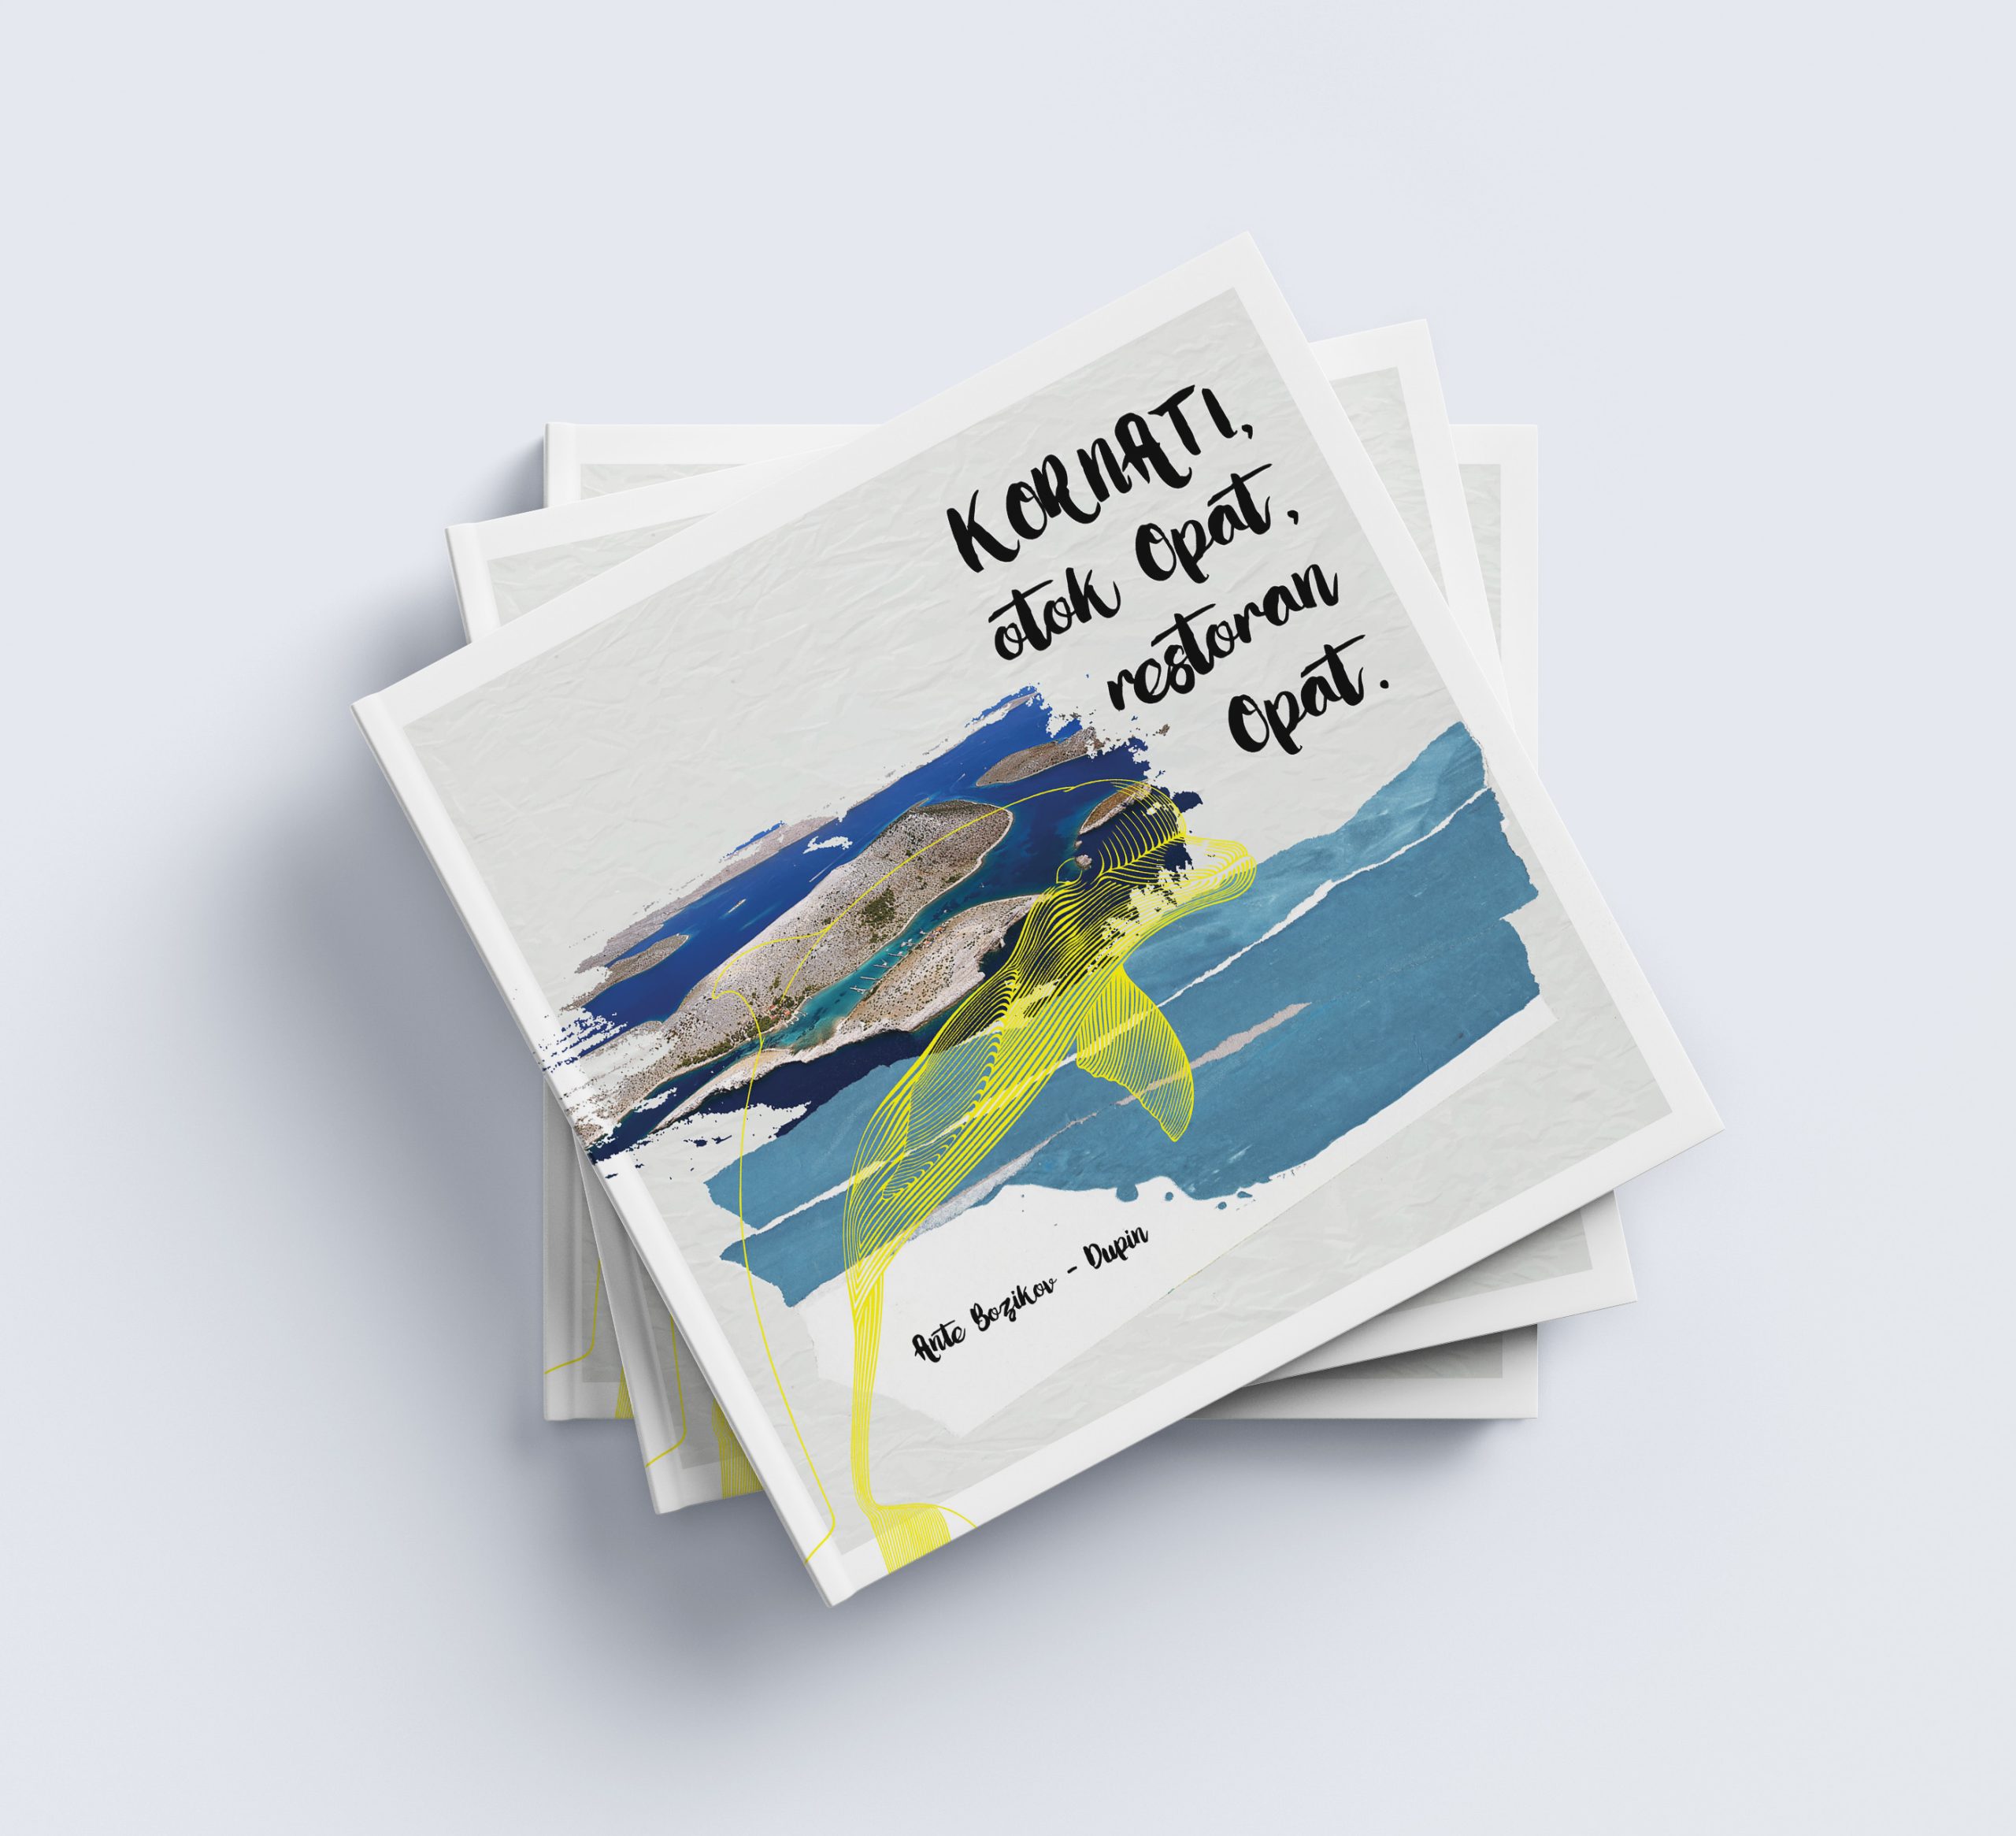 Kuharica – Kornati otok Opat, restoran Opat